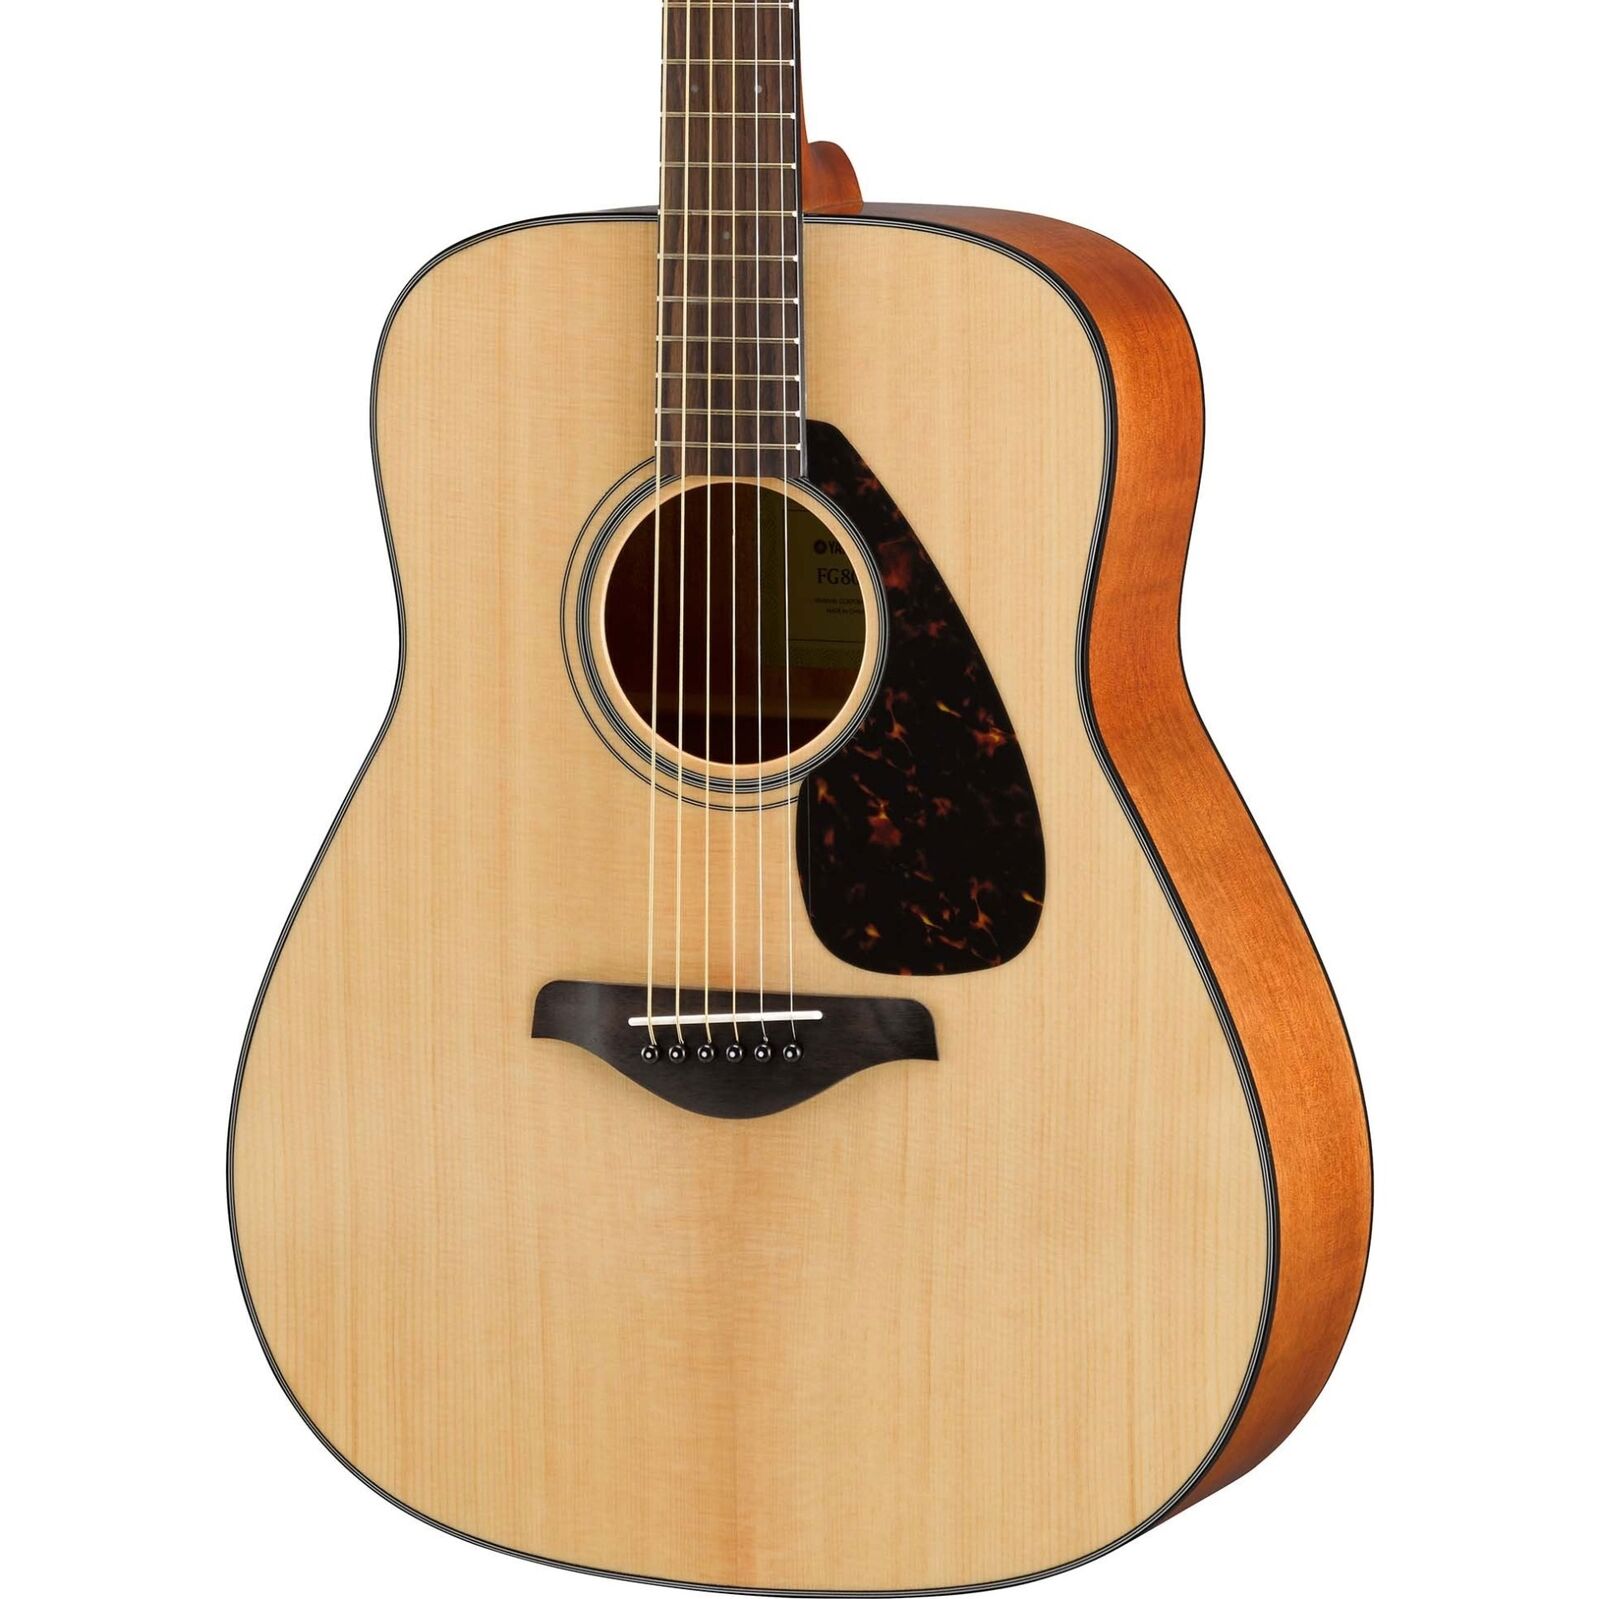 Yamaha FG800 Solid Top Acoustic Guitar for sale online | eBay